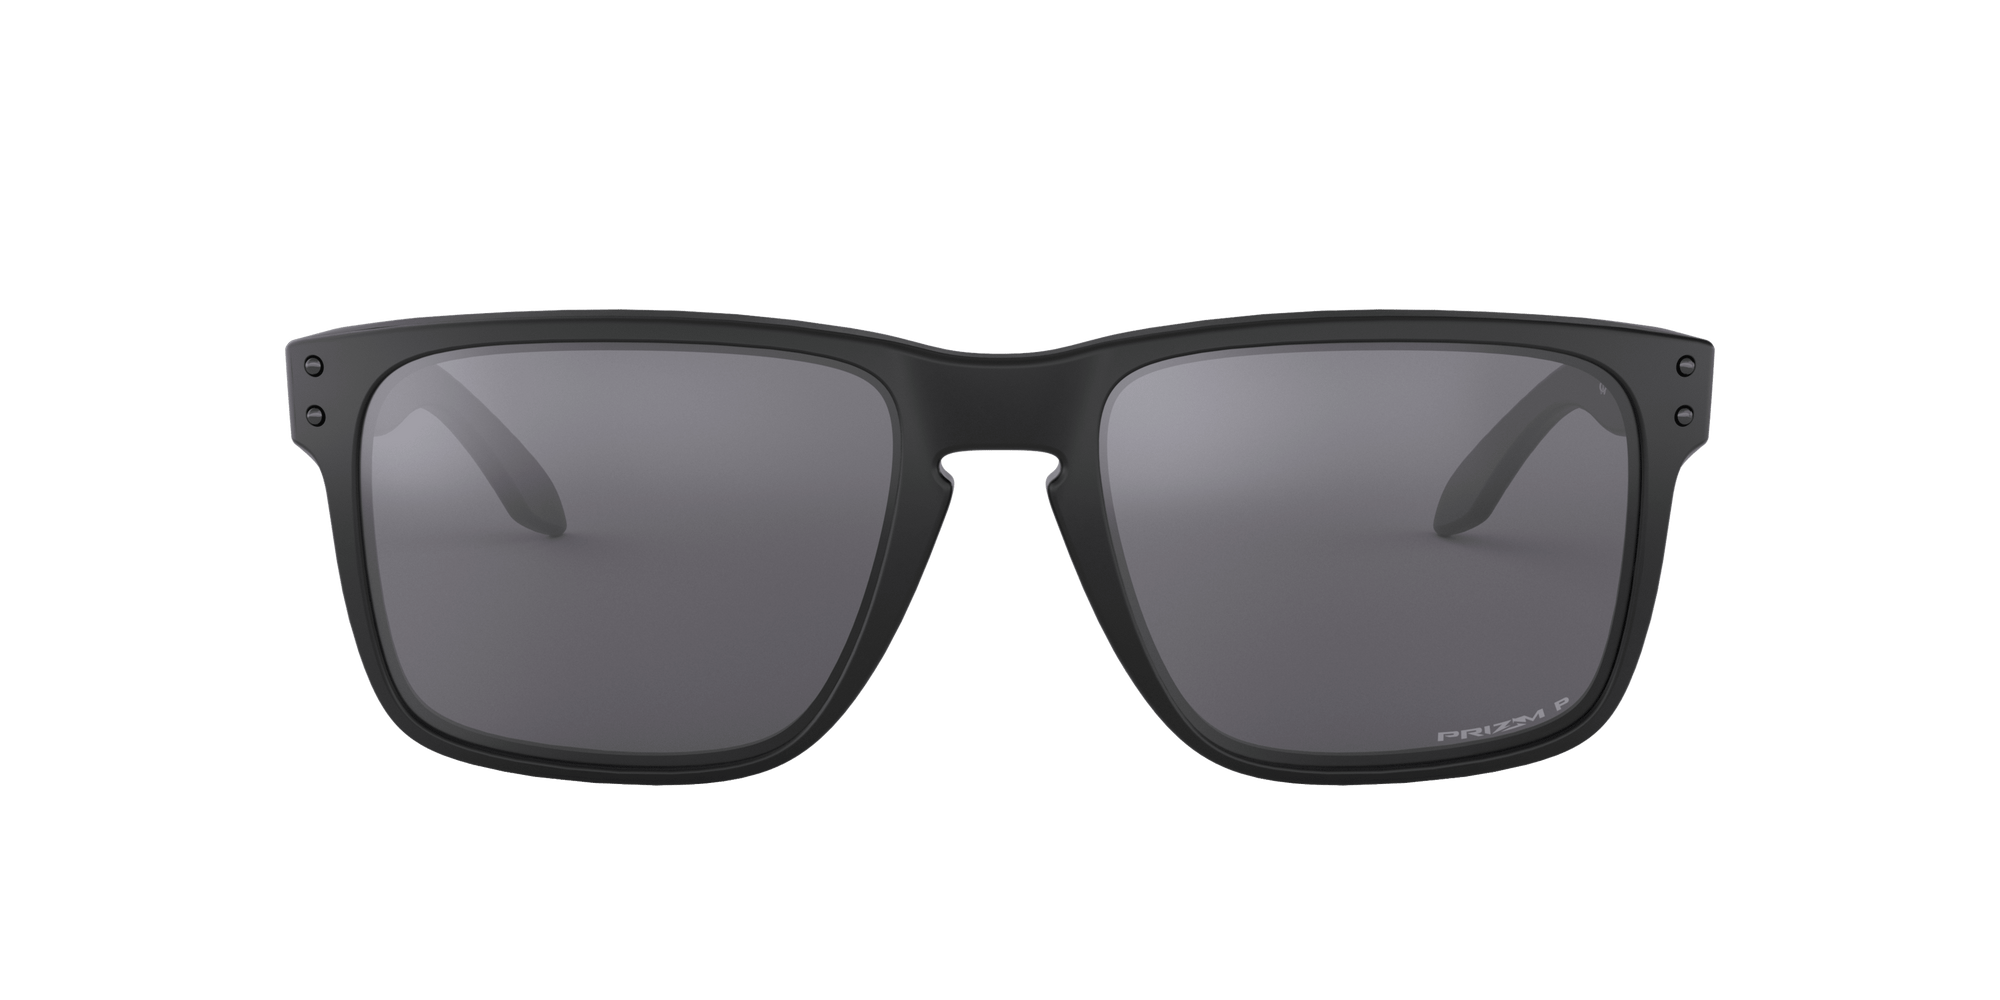 OAKLEY Holbrook XL Matte Black - Prizm Black Polarized Sunglasses Sunglasses Oakley 